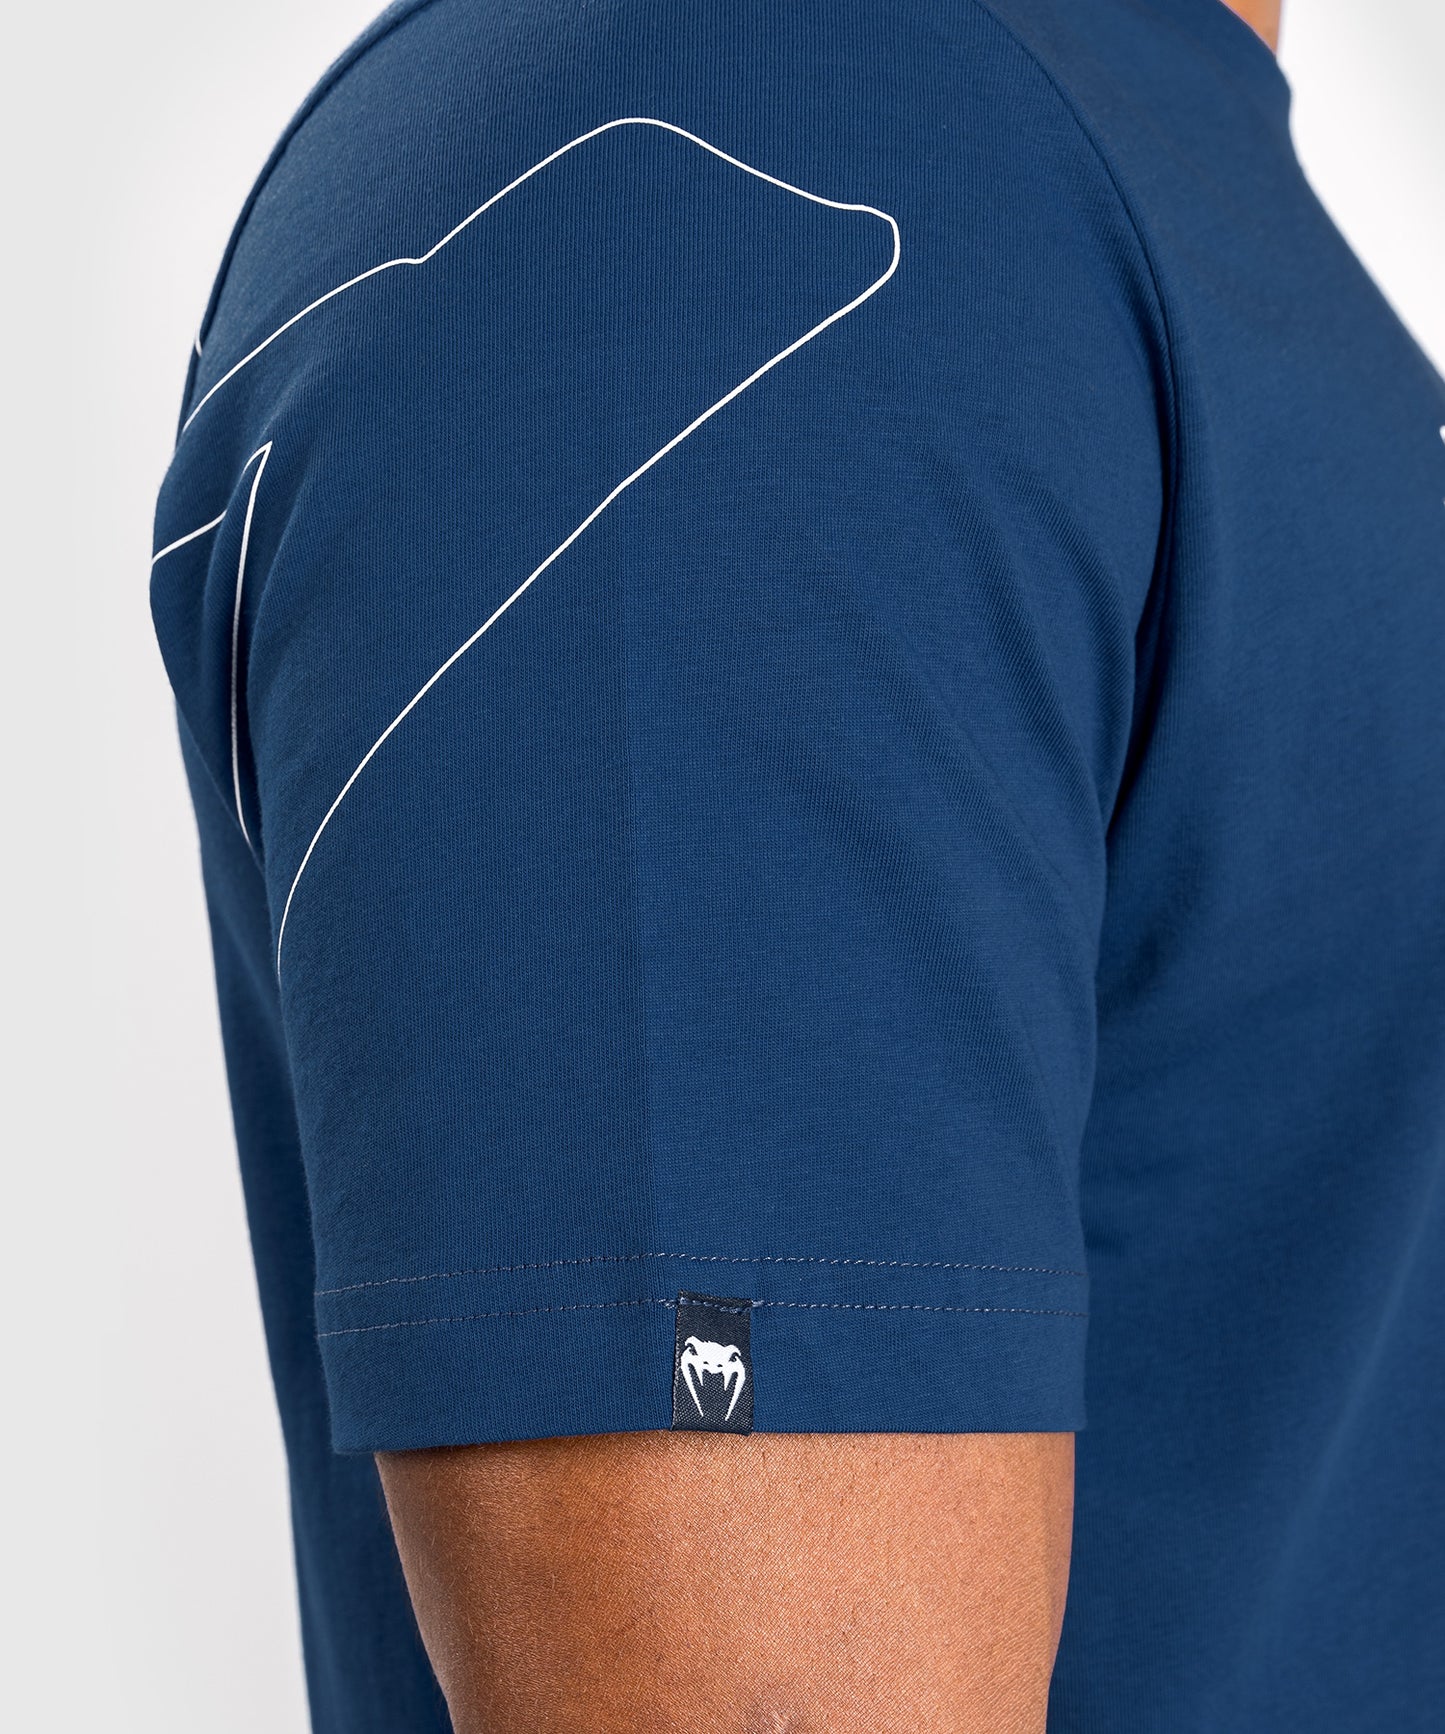 Venum Snake Print T-Shirt - Blue navy